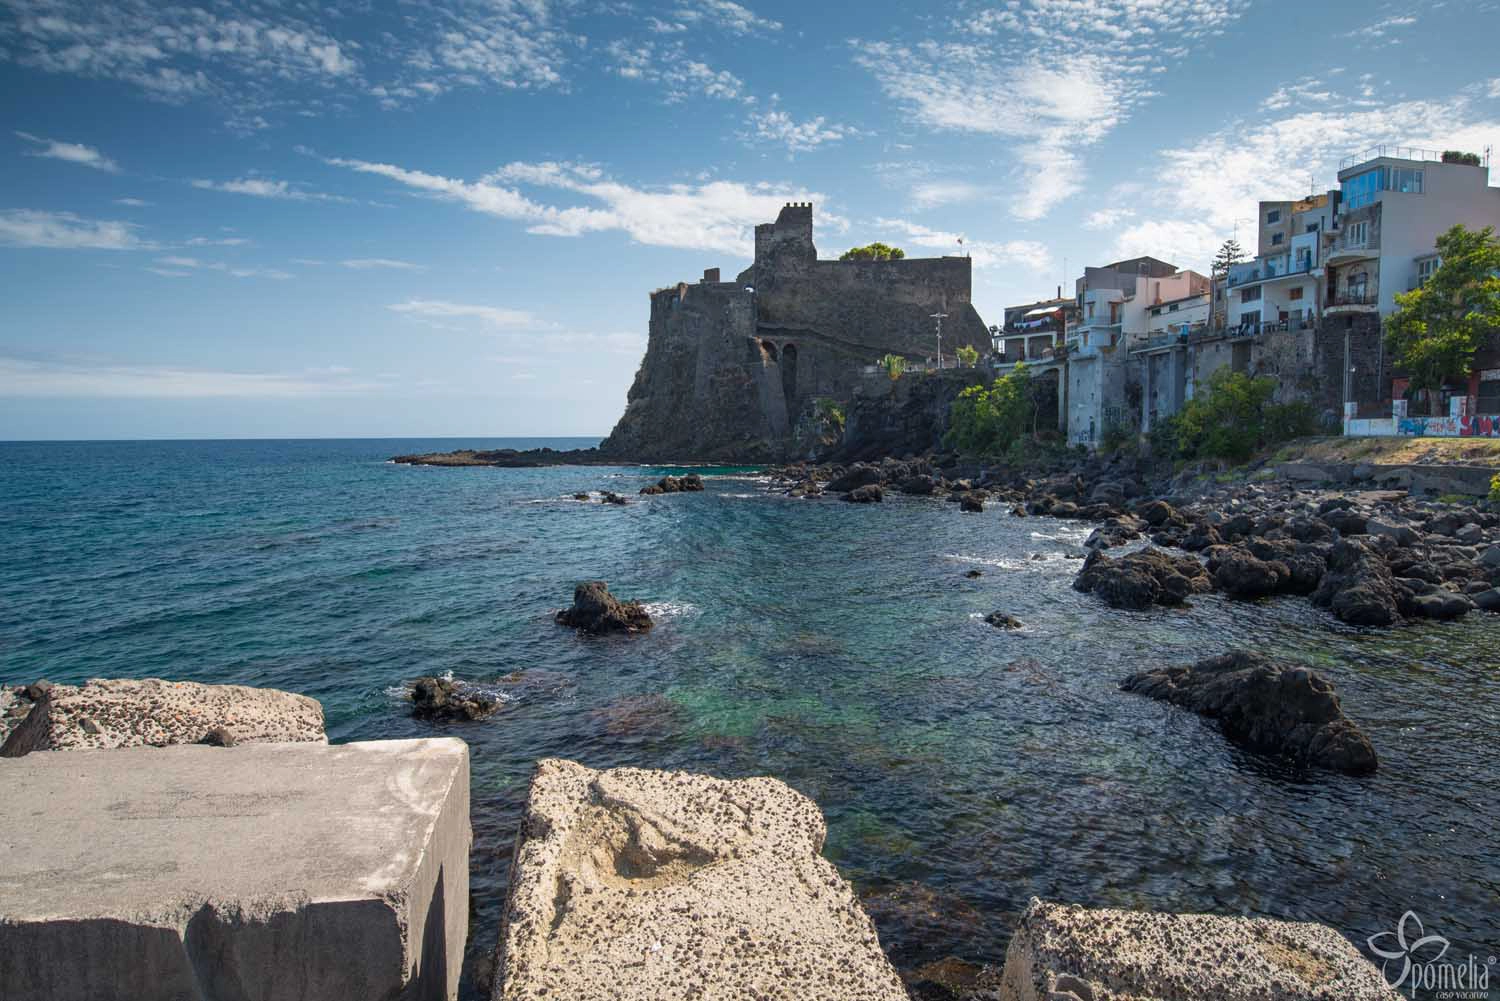  Aci Castello  strand - Szicília